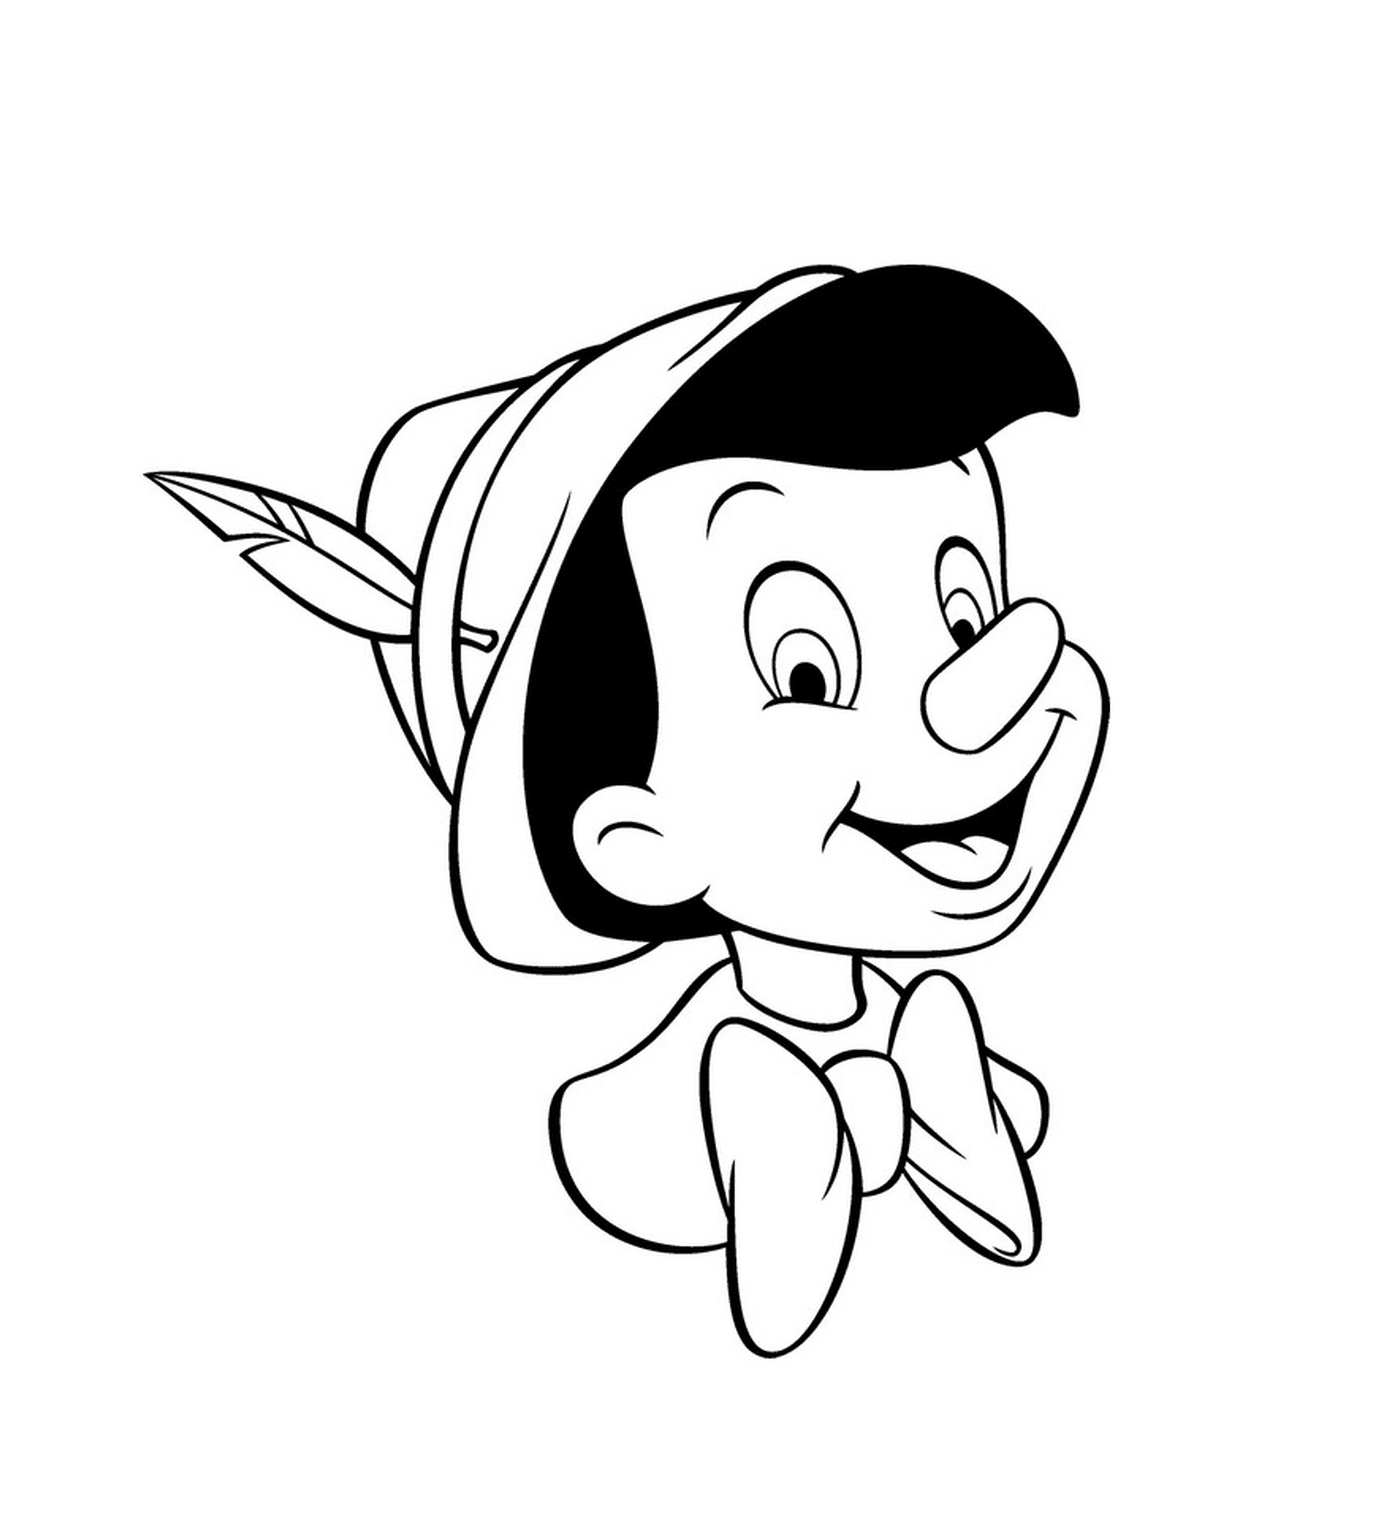  Felice e loquace Pinocchio 